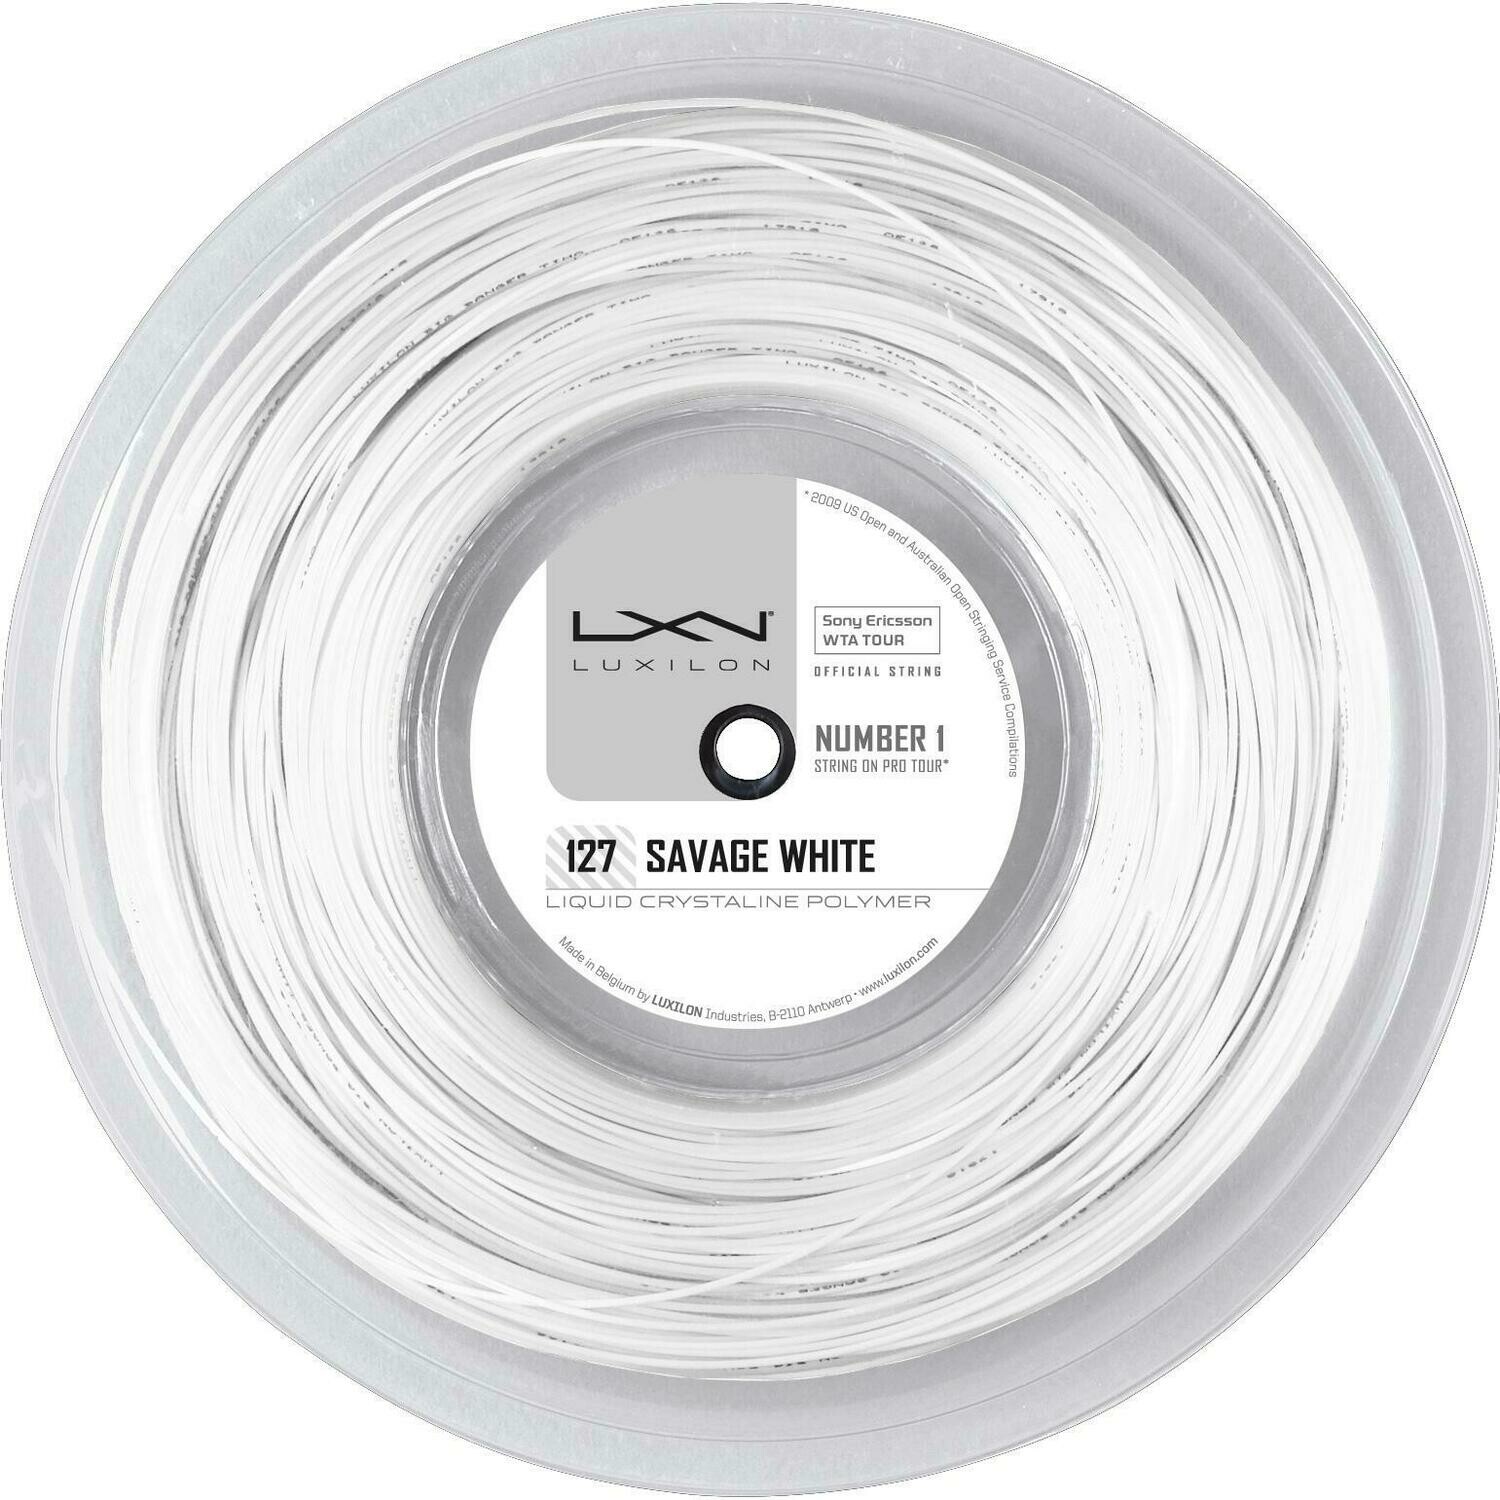 Luxilon Savage 127 Tennis String 200m Reel - White